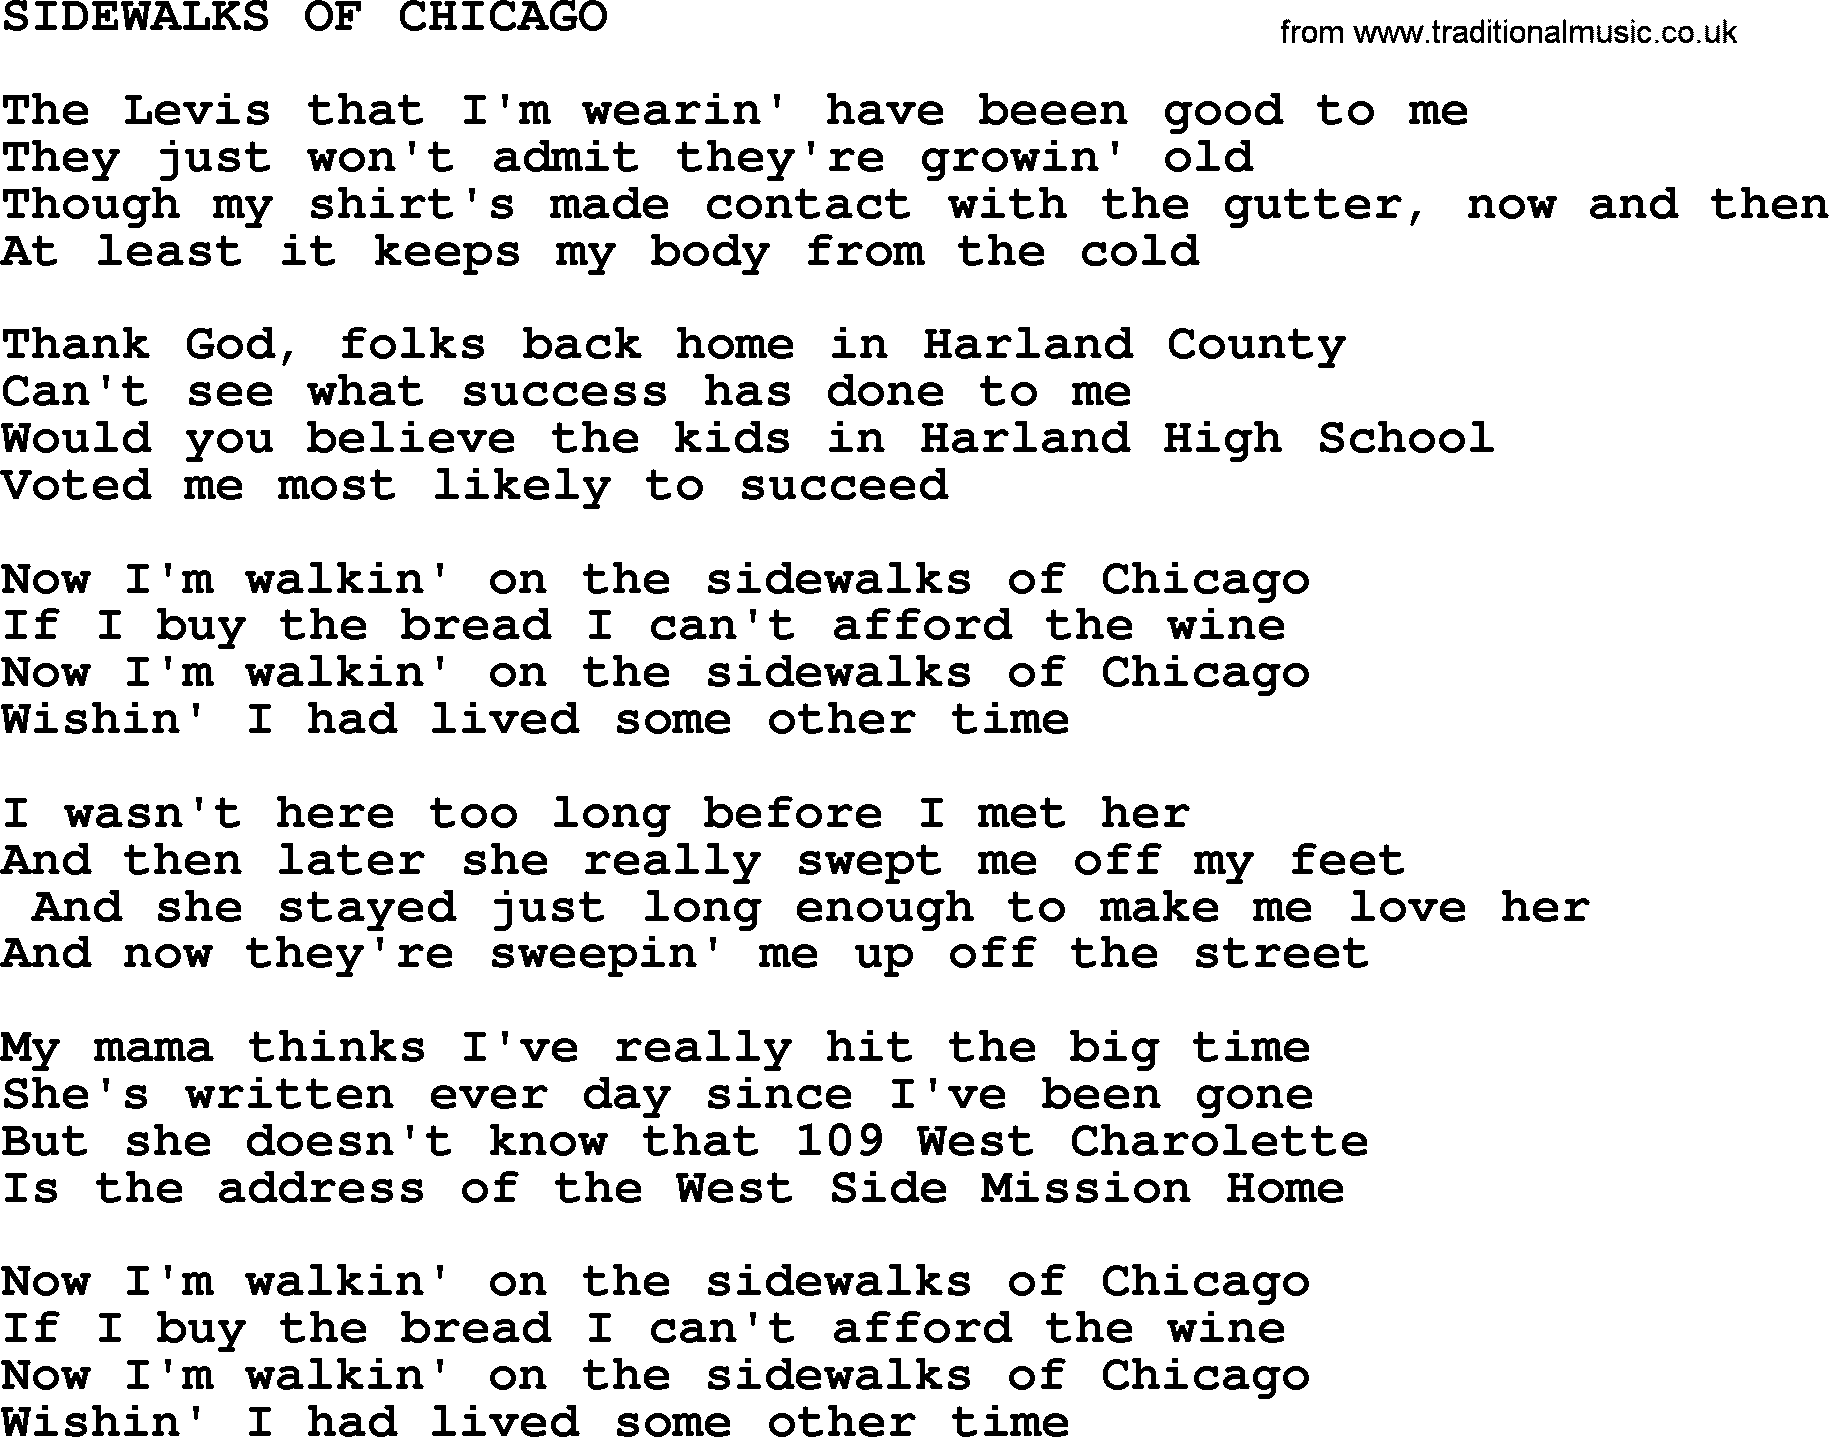 Merle Haggard song: Sidewalks Of Chicago, lyrics.